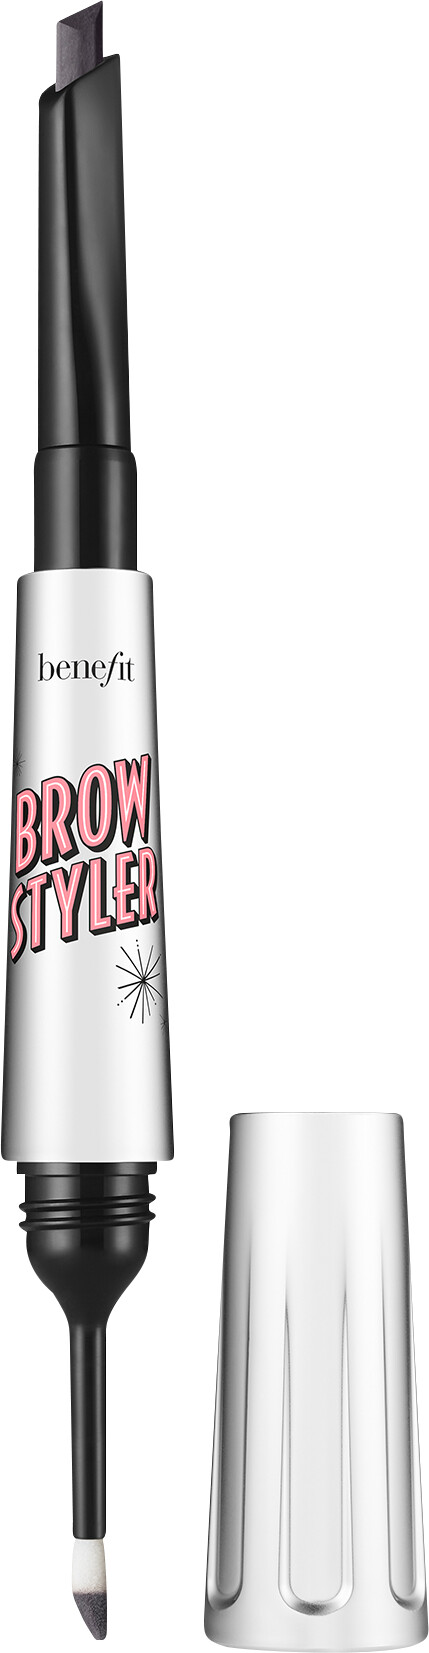 Benefit Brow Styler Multitasking Pencil & Powder For Brows Cool Grey